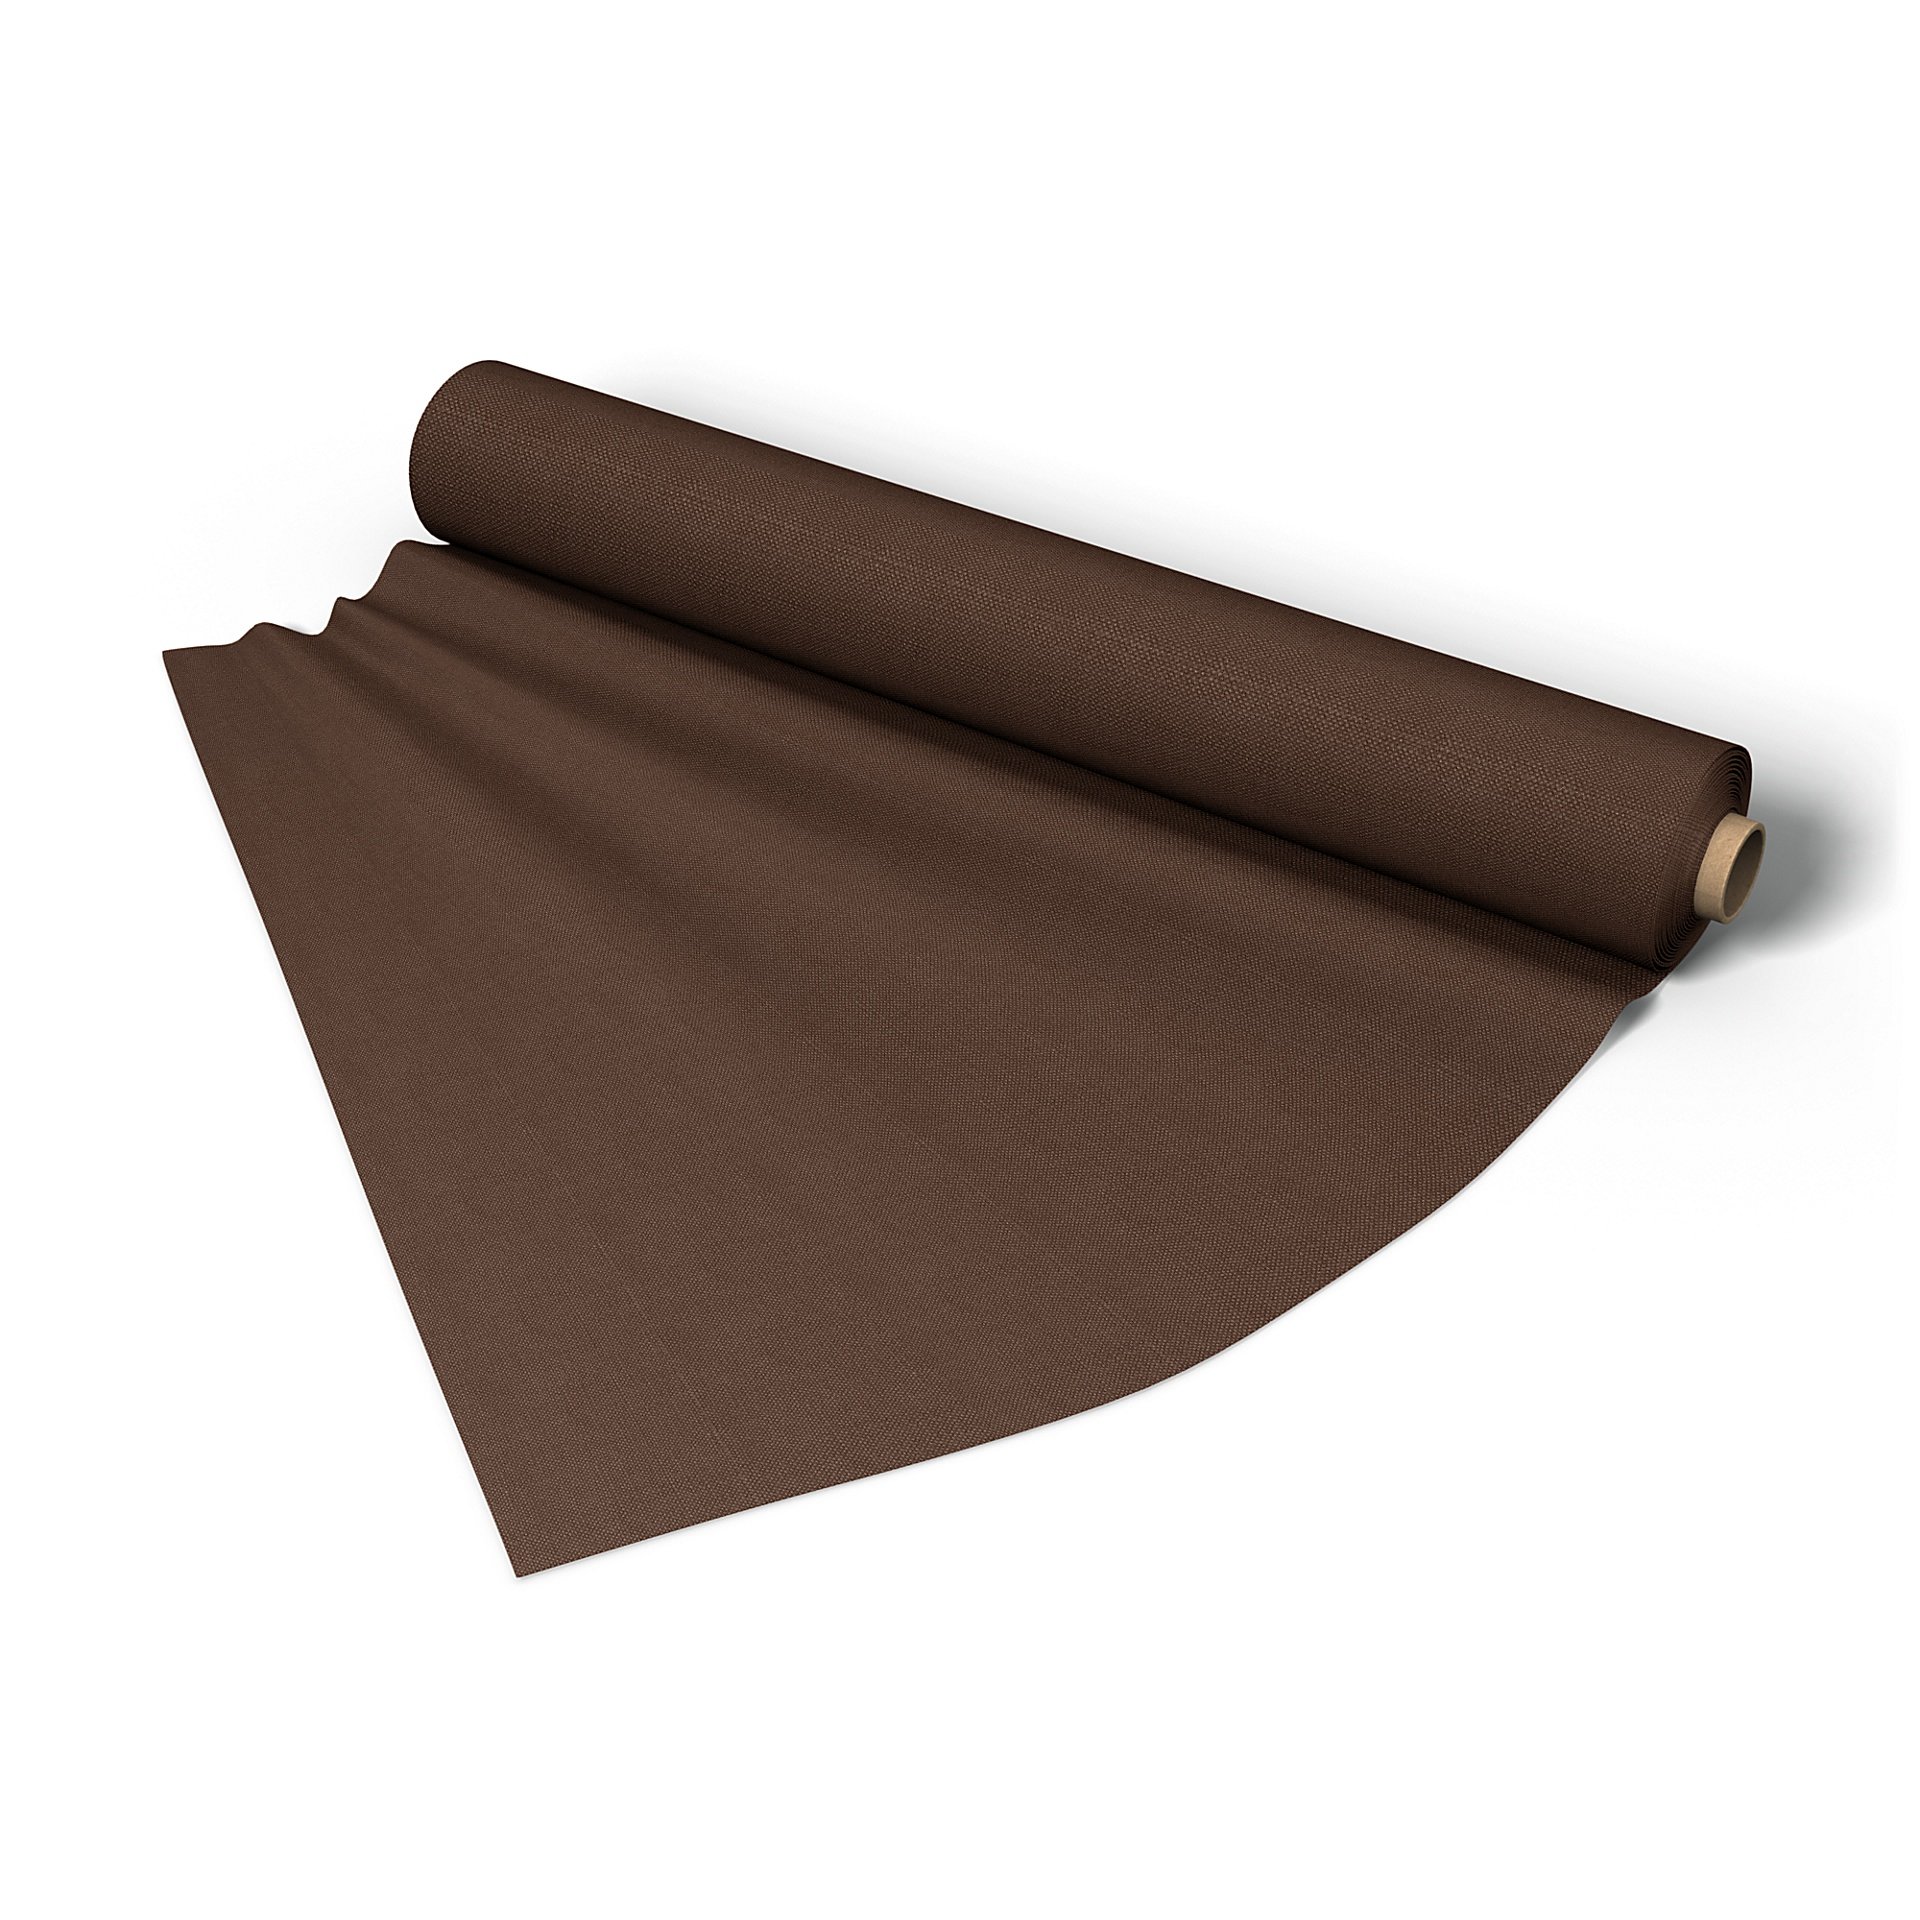 Fabric per metre, Chocolate, Linen - Bemz